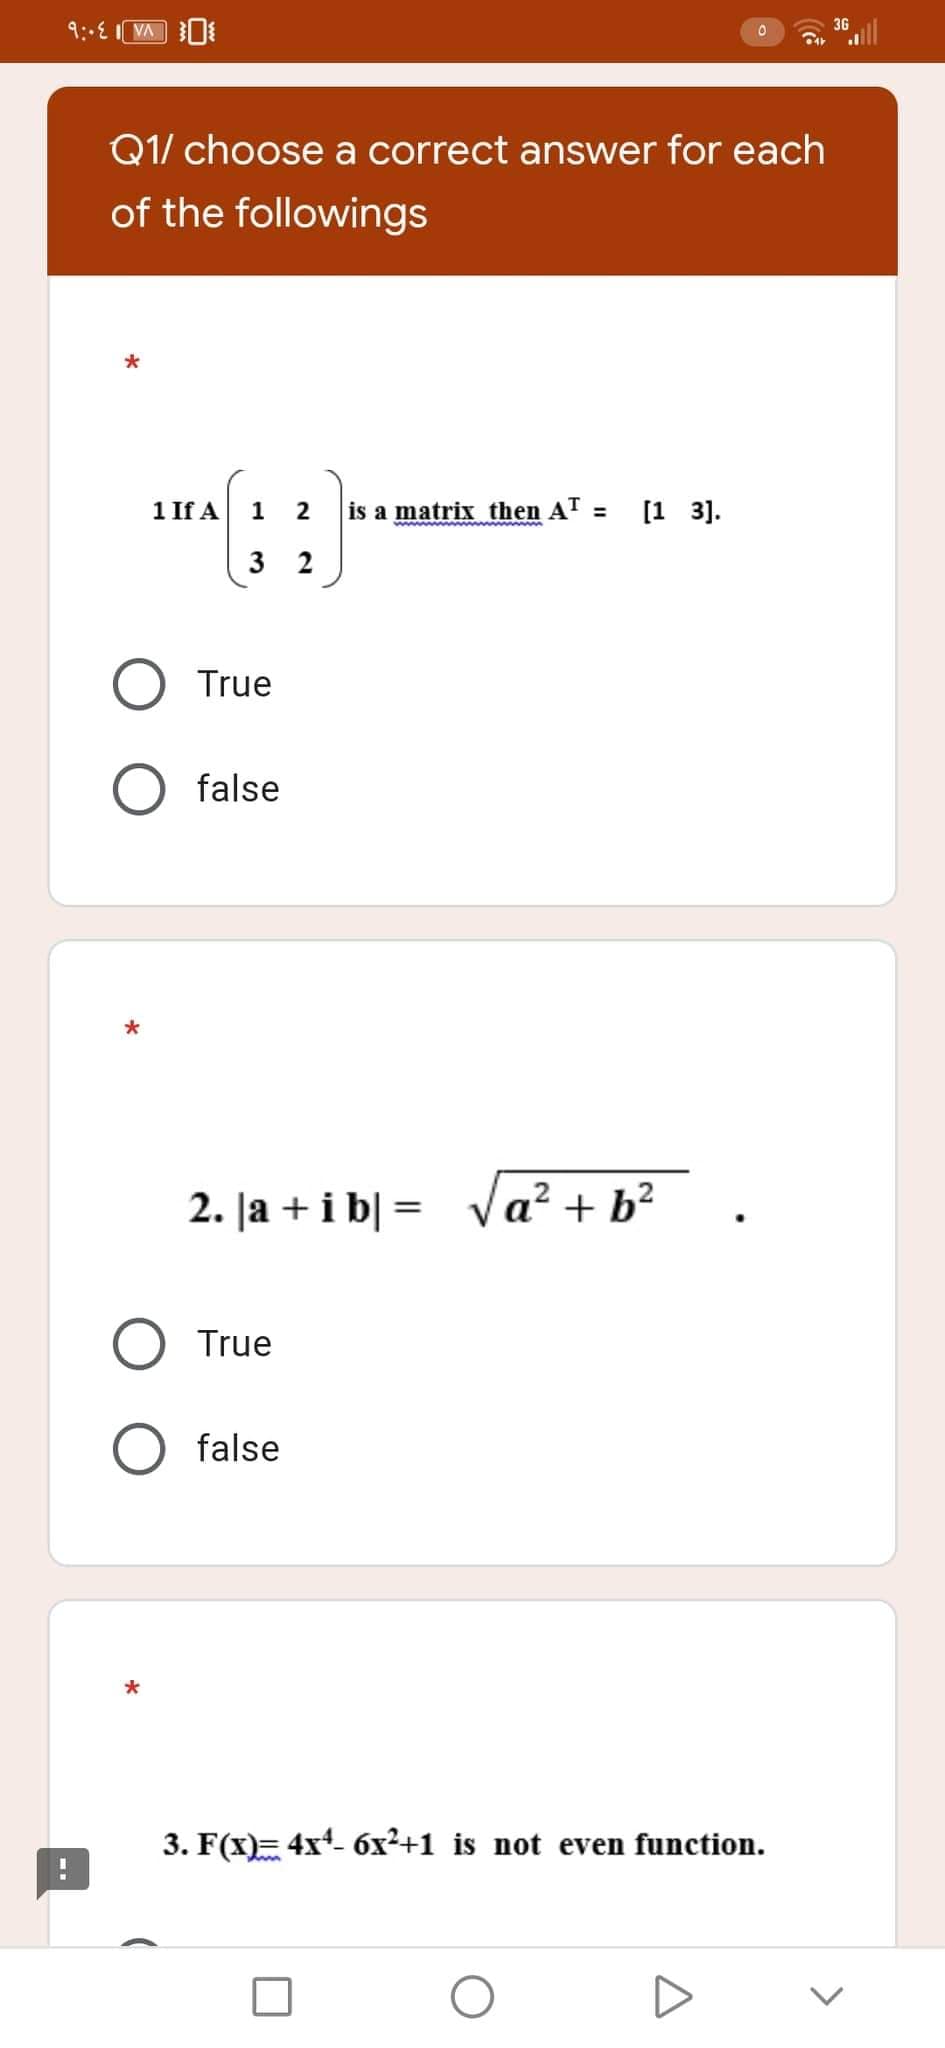 36
9:-E
VA
0
Q1/ choose a correct answer for each
of the followings
*
1
2
is a matrix then A¹ = [13].
3 2
2. |a + i b] =
a² + b²
True
O false
*
3. F(x)= 4x¹- 6x²+1 is not even function.
O
*
1 If A
True
false